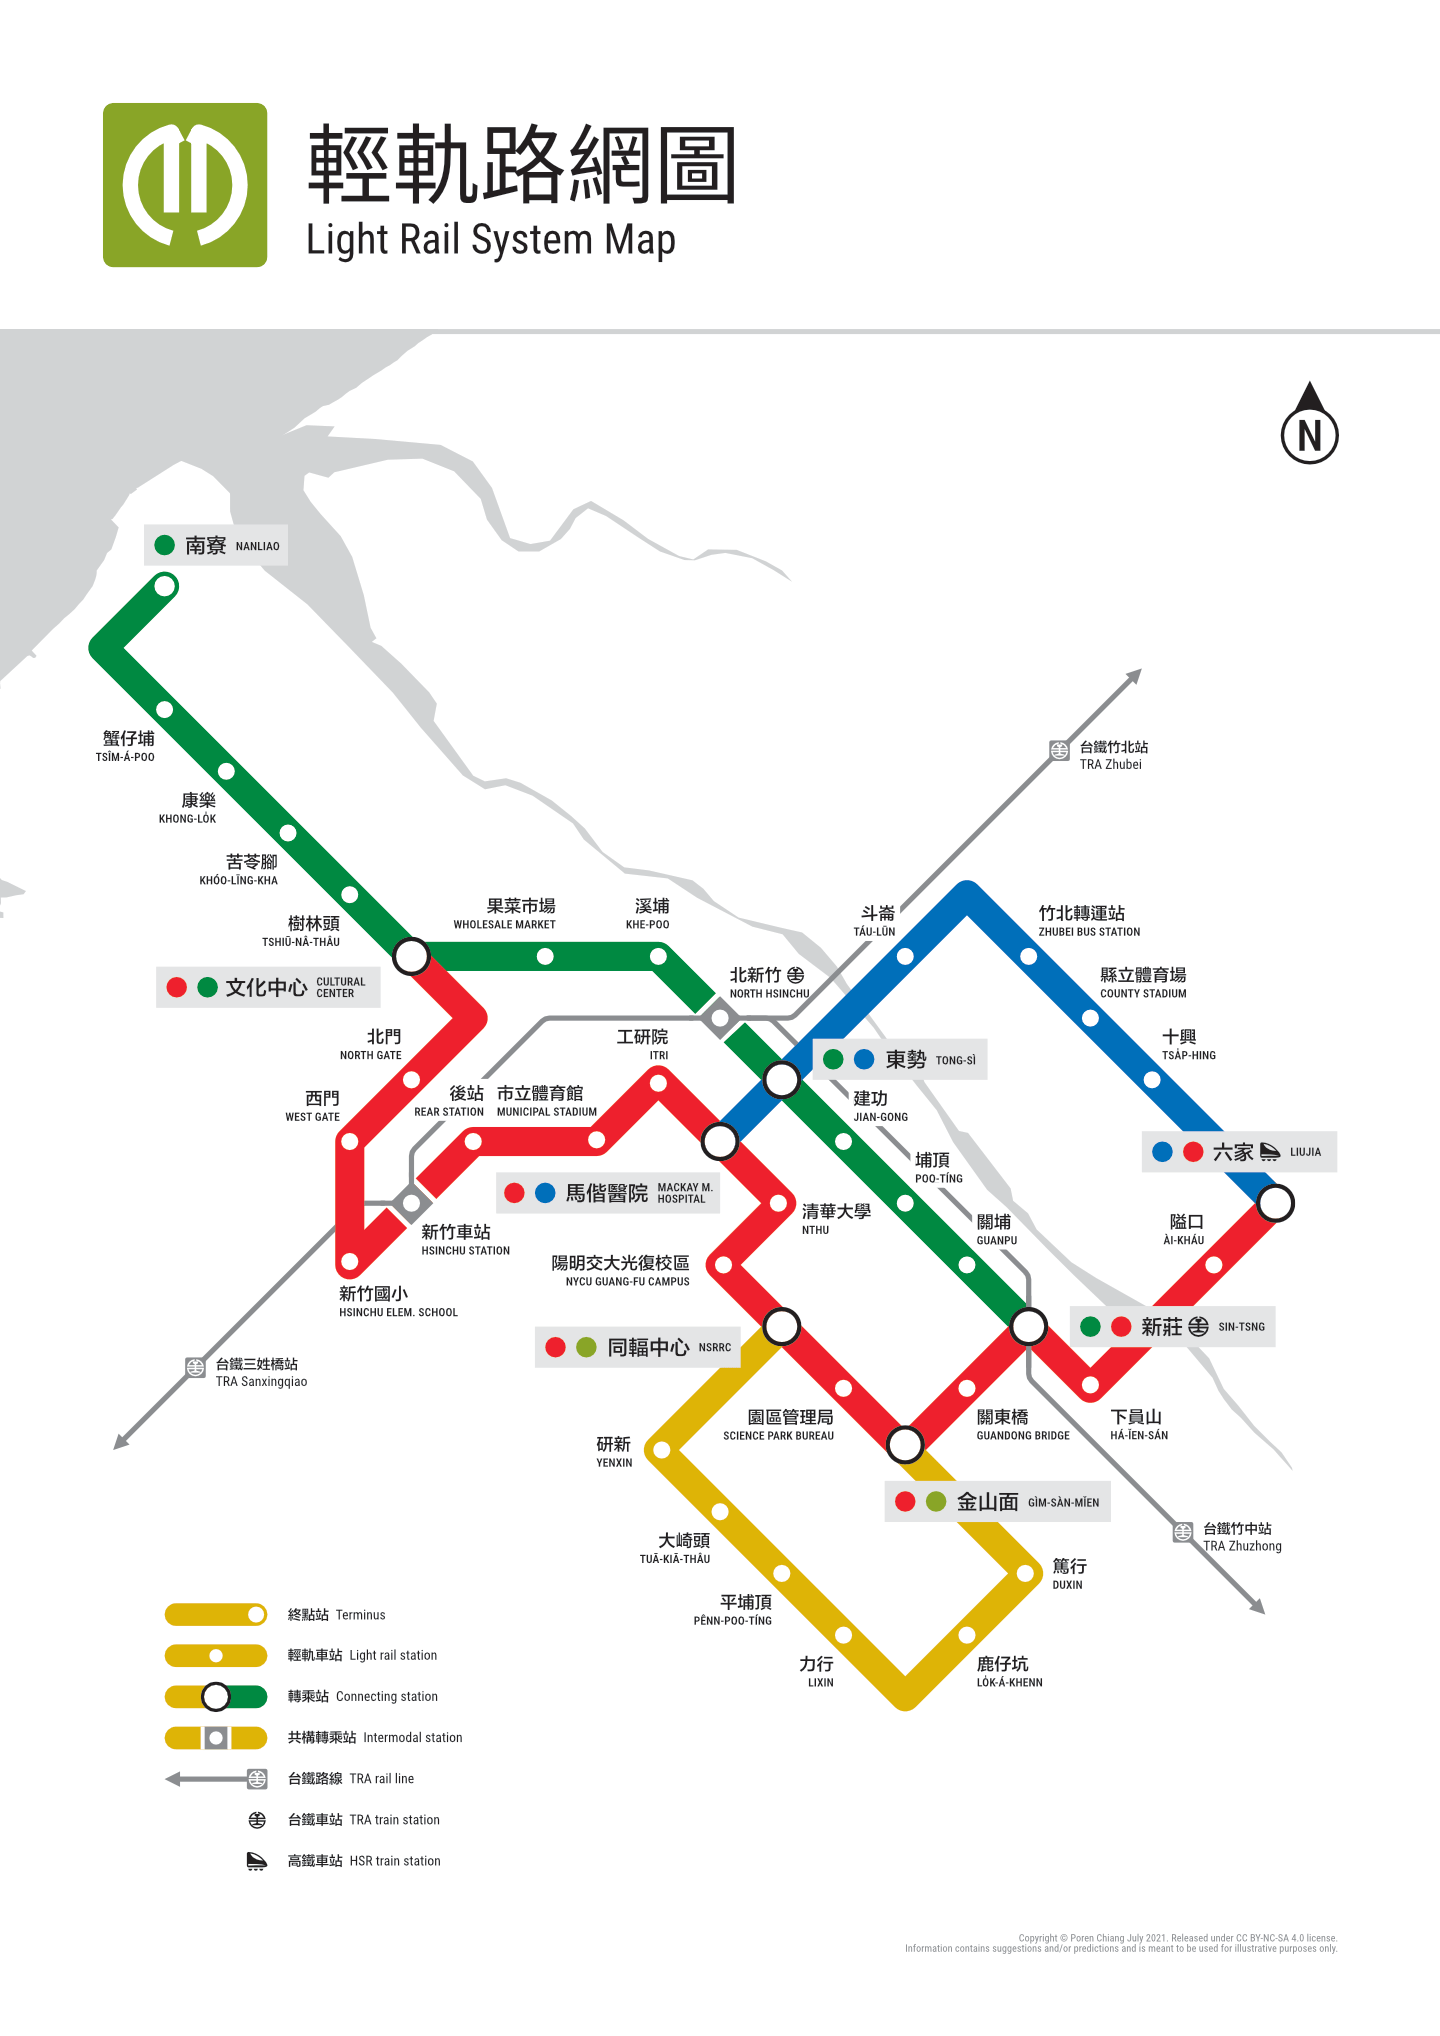 新竹輕軌路網圖 Hsinchu LRT System Map / © Poren Chiang 2021, CC BY-NC-SA 4.0